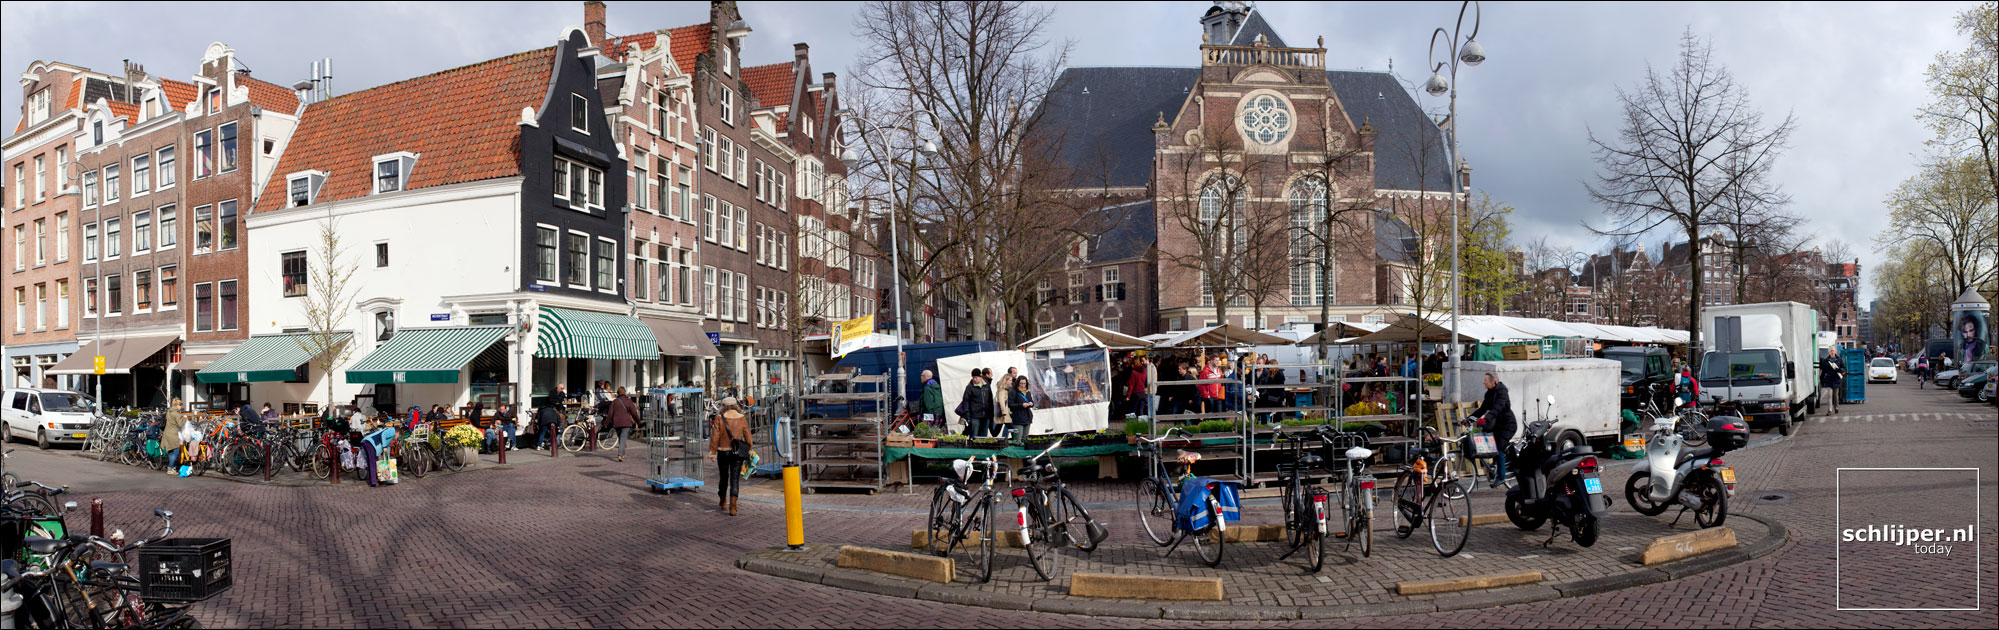 Nederland, Amsterdam, 7 april 2012